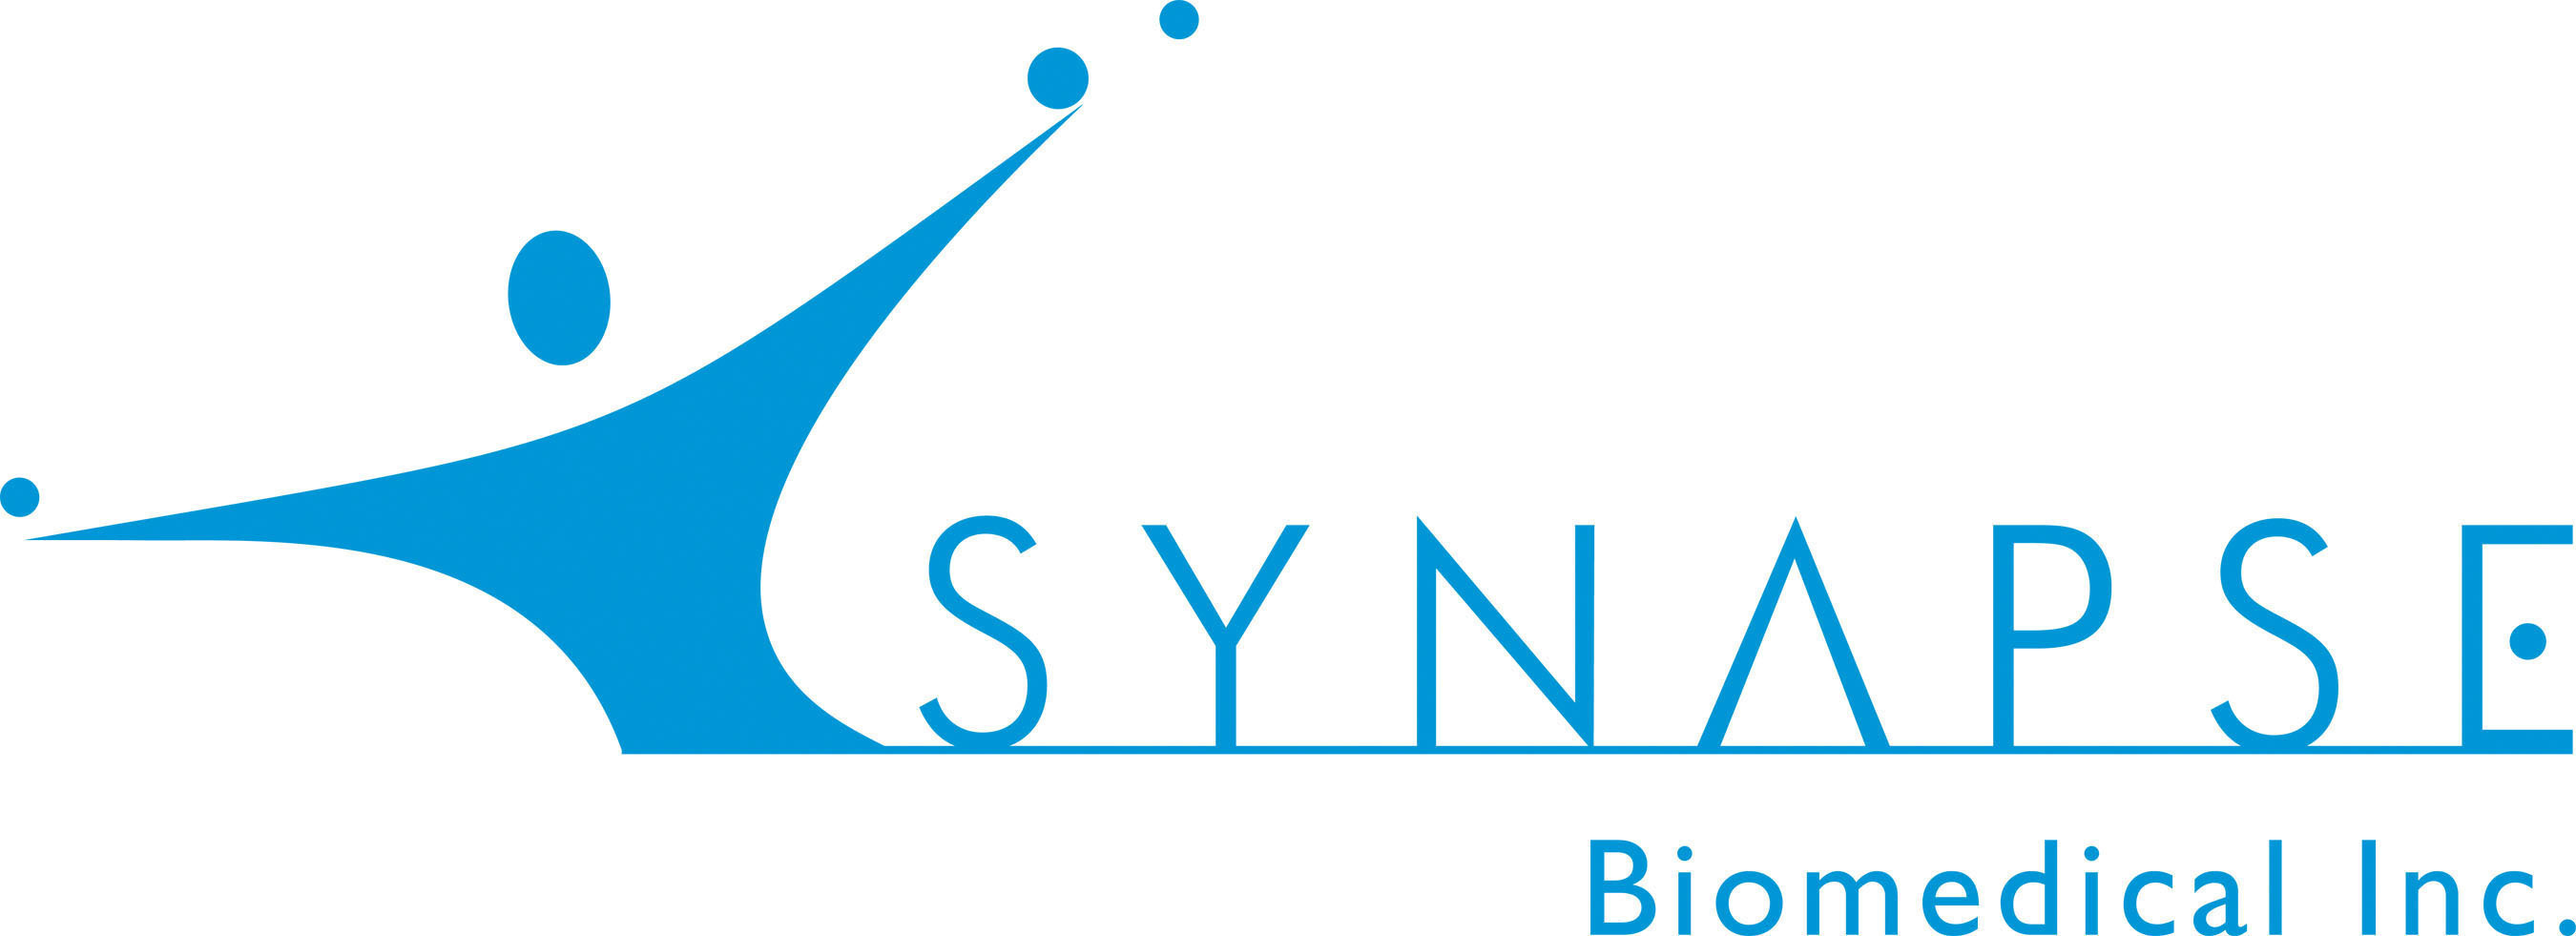 Synapse Biomedical.